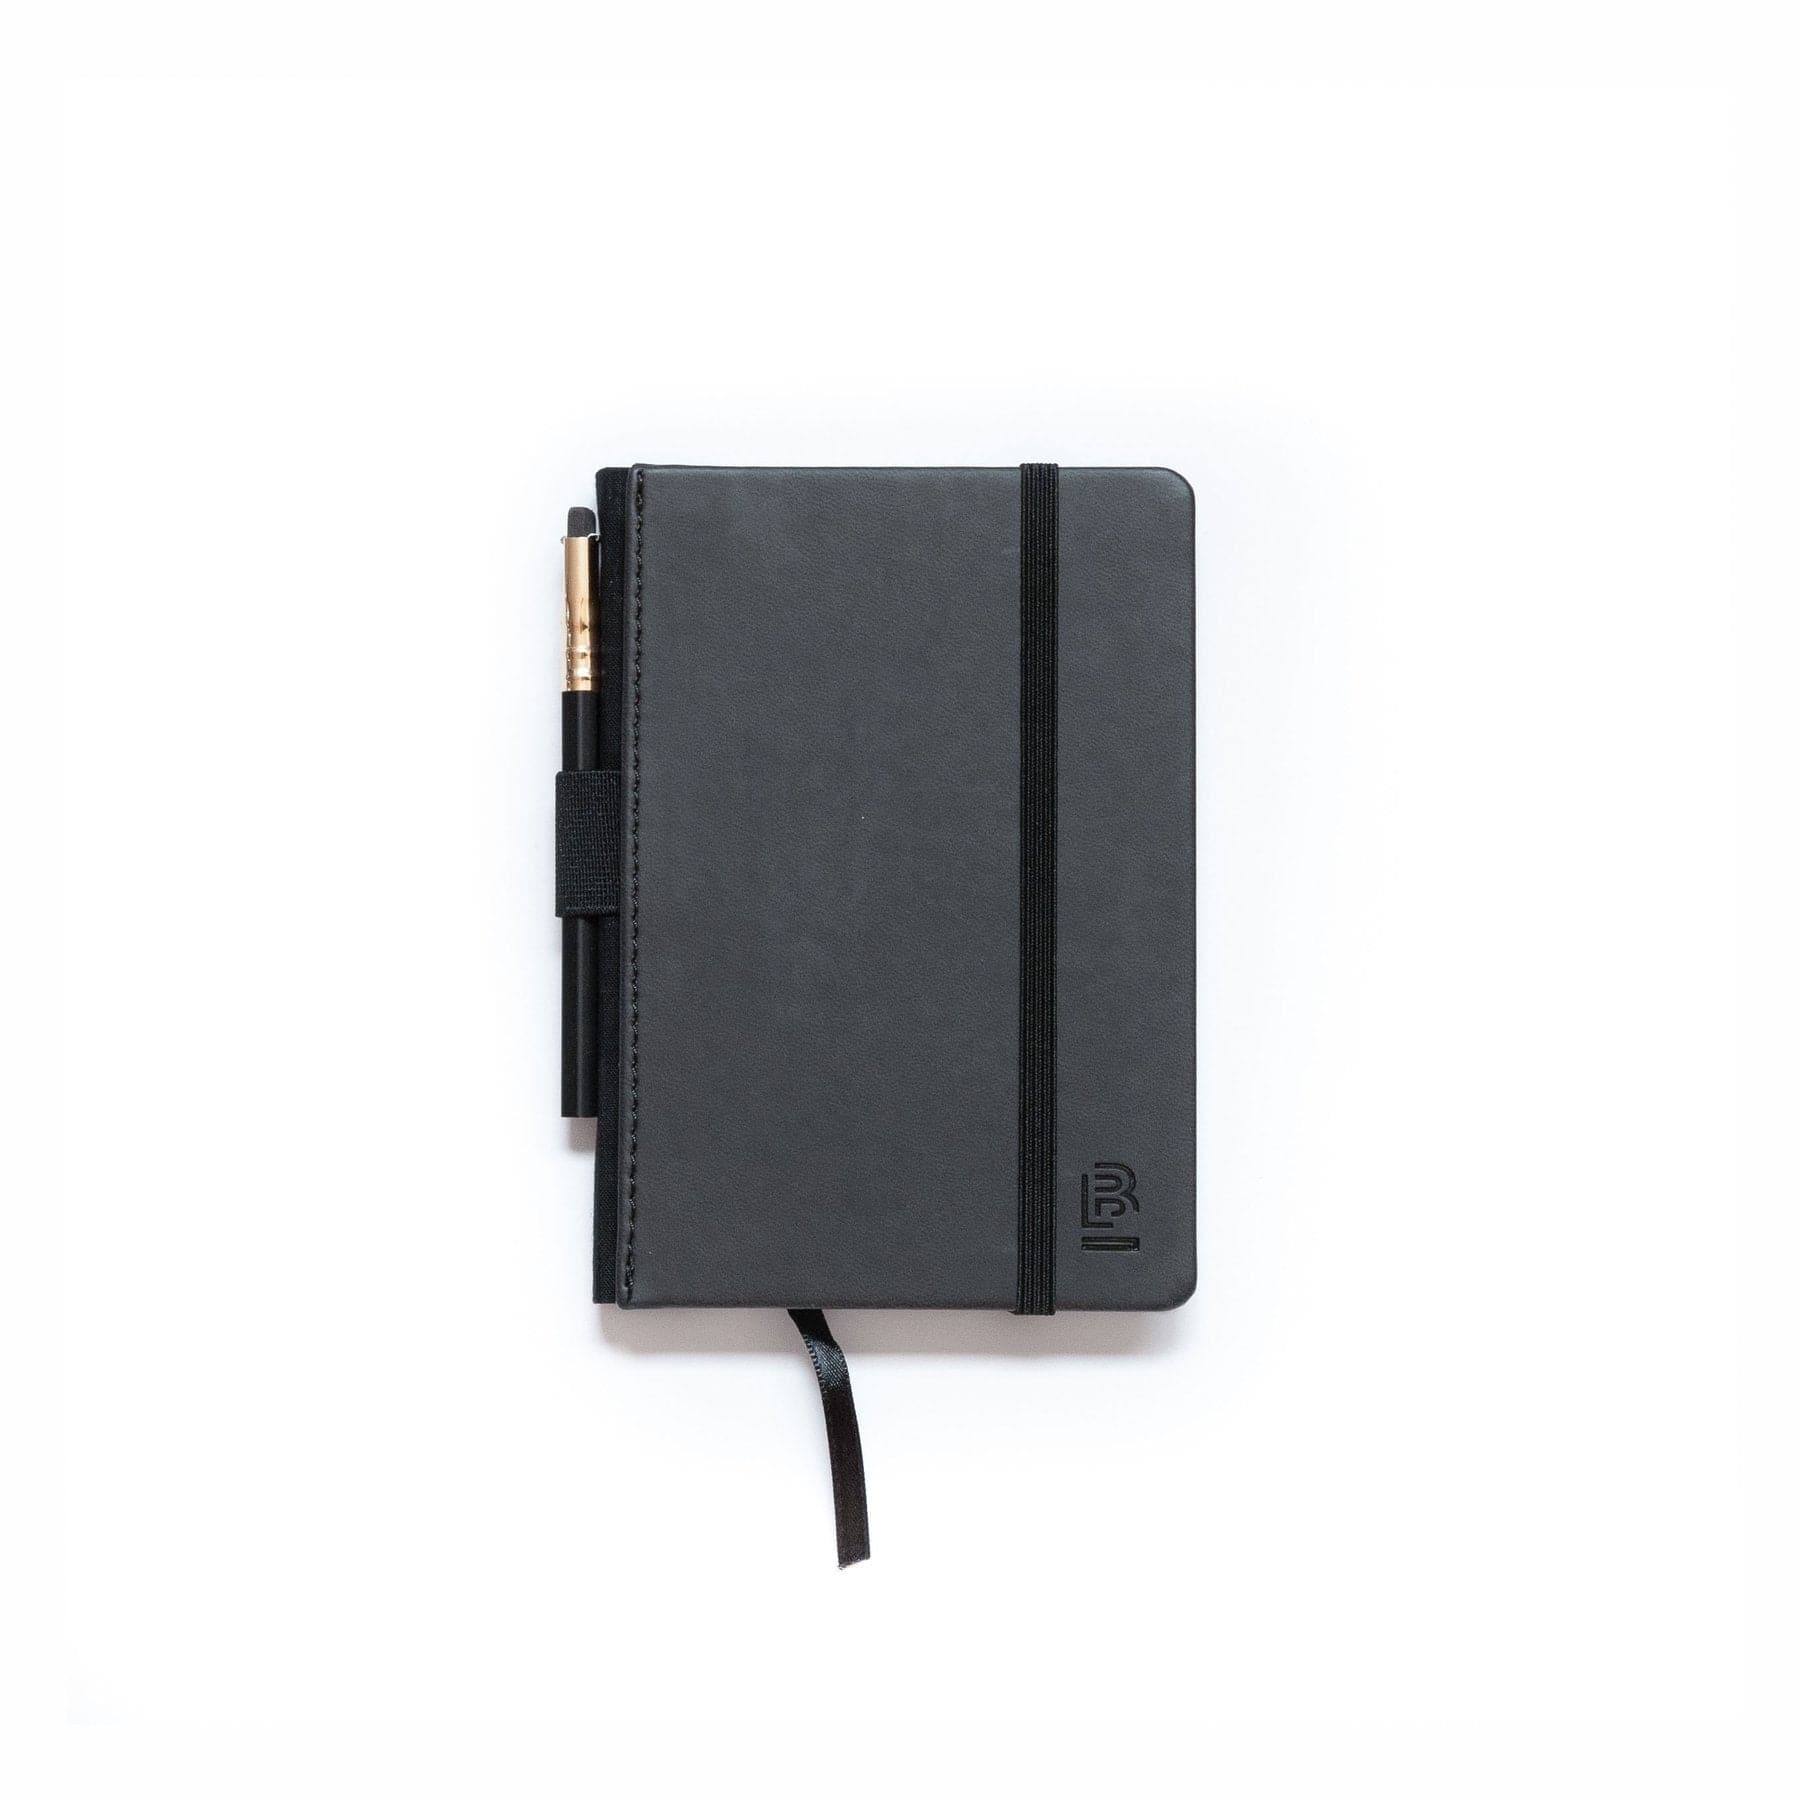 Blackwing Slate A6 Notebook + Pencil [Black]